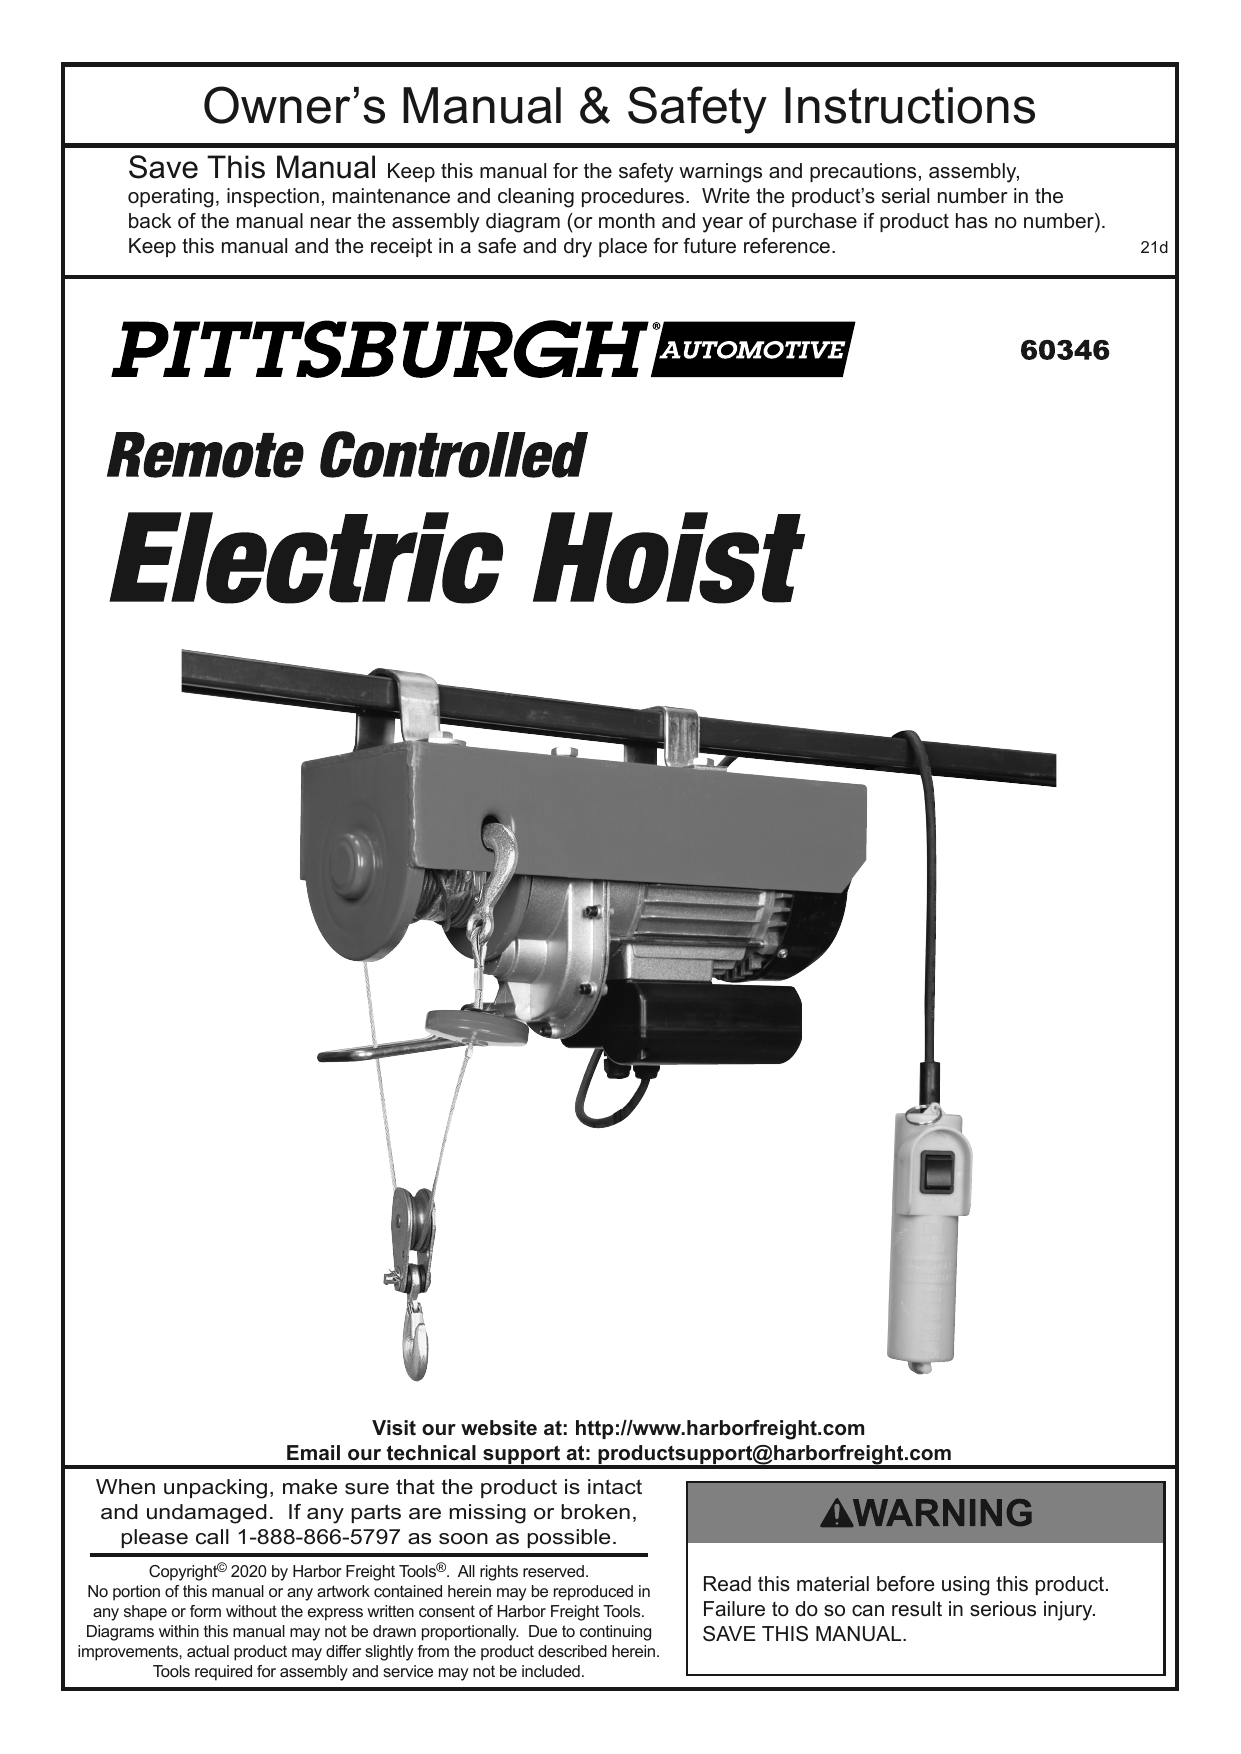 PITTSBURGH AUTOMOTIVE Item 60346-UPC 193175339461 440 lb. Electric Hoist  Owner's Manual | Manualzz  Pittsburgh Electric Hoist 60346 Wiring Diagram    Manualzz